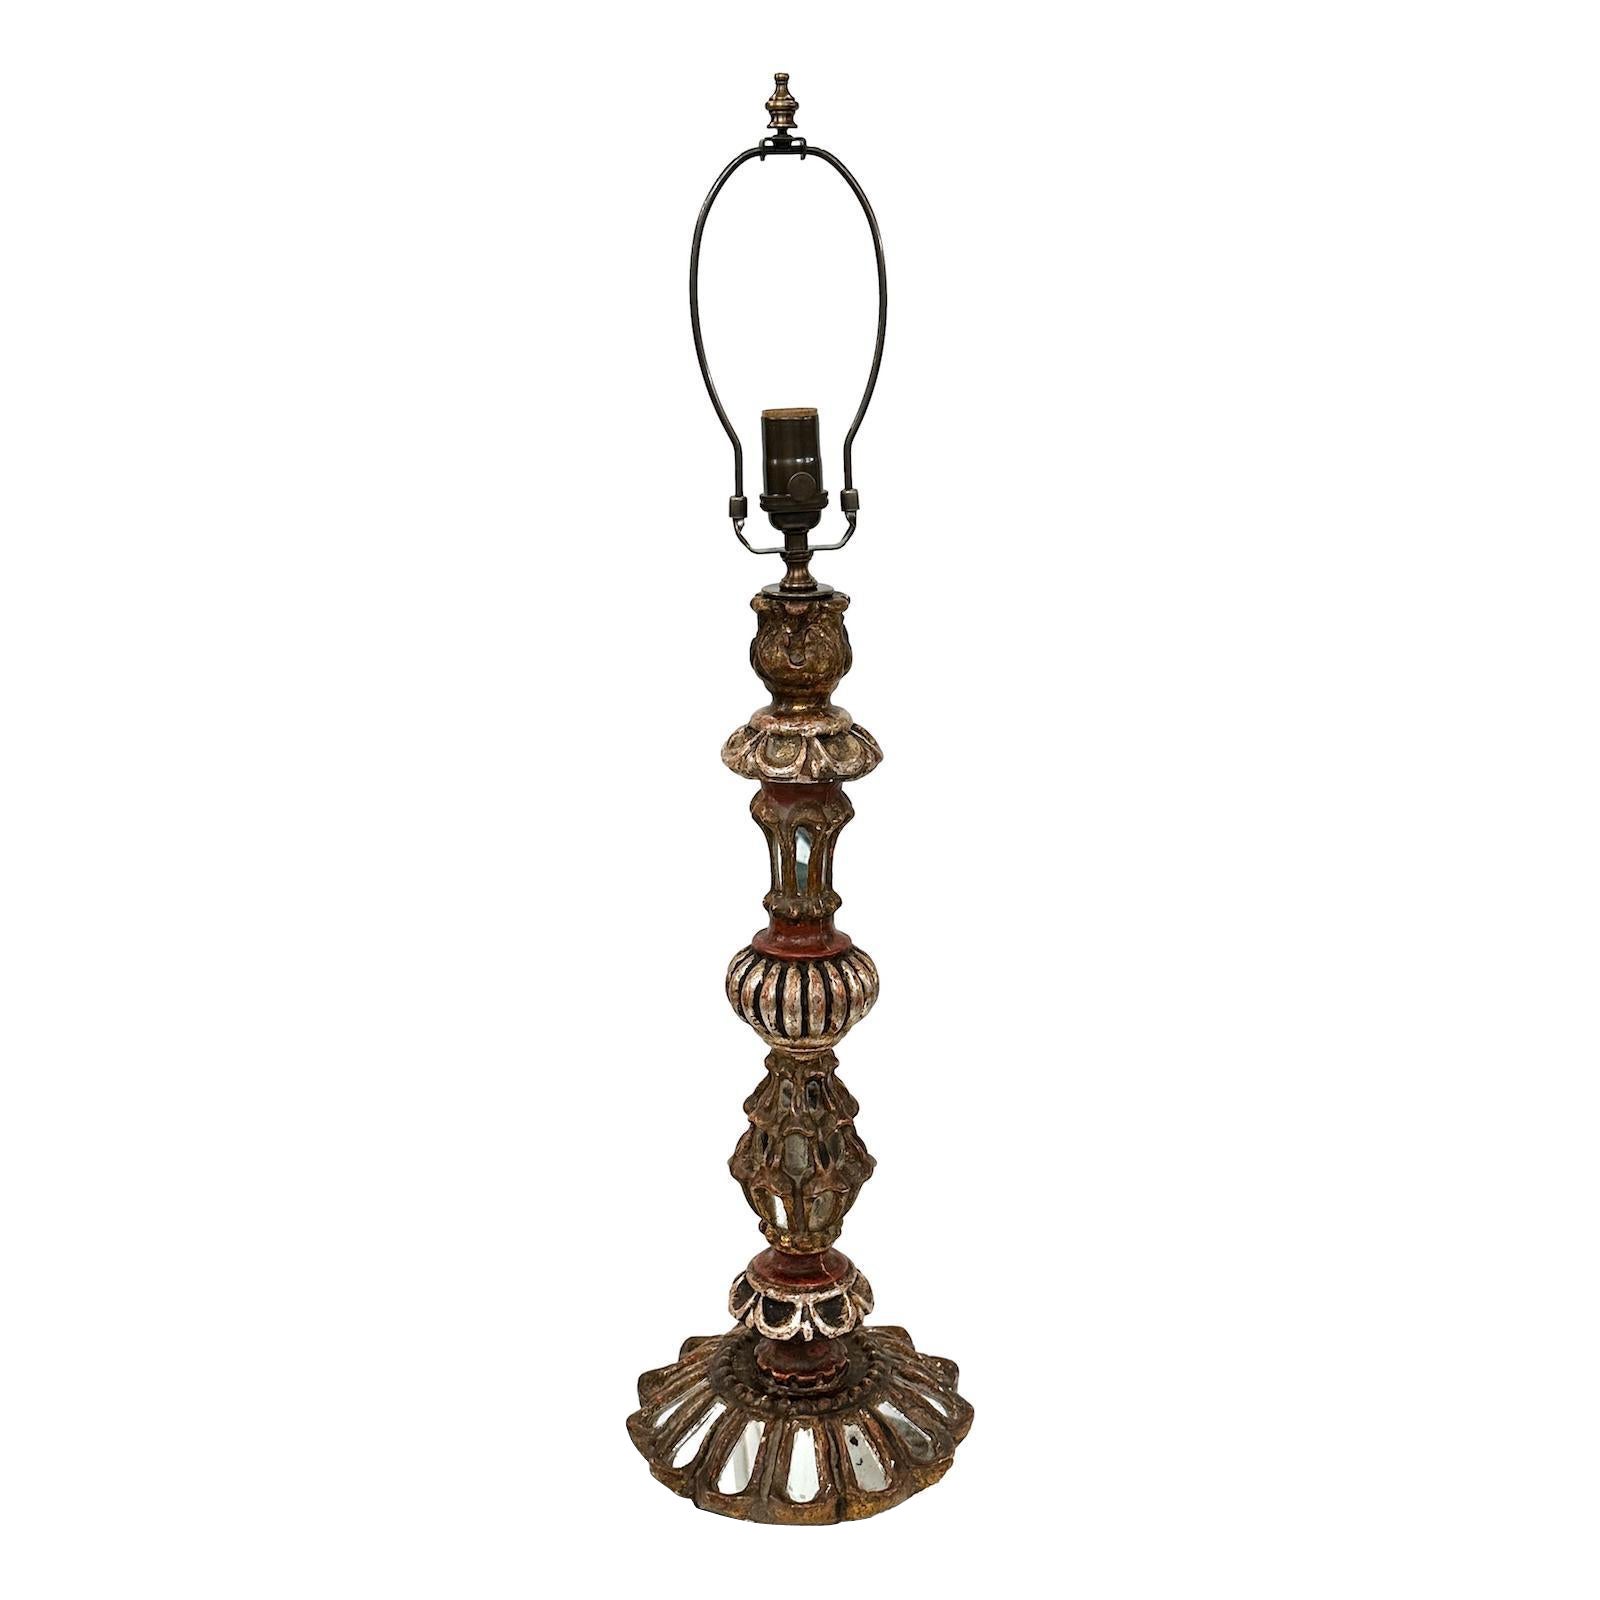 Antique Candlesitck Lamp For Sale